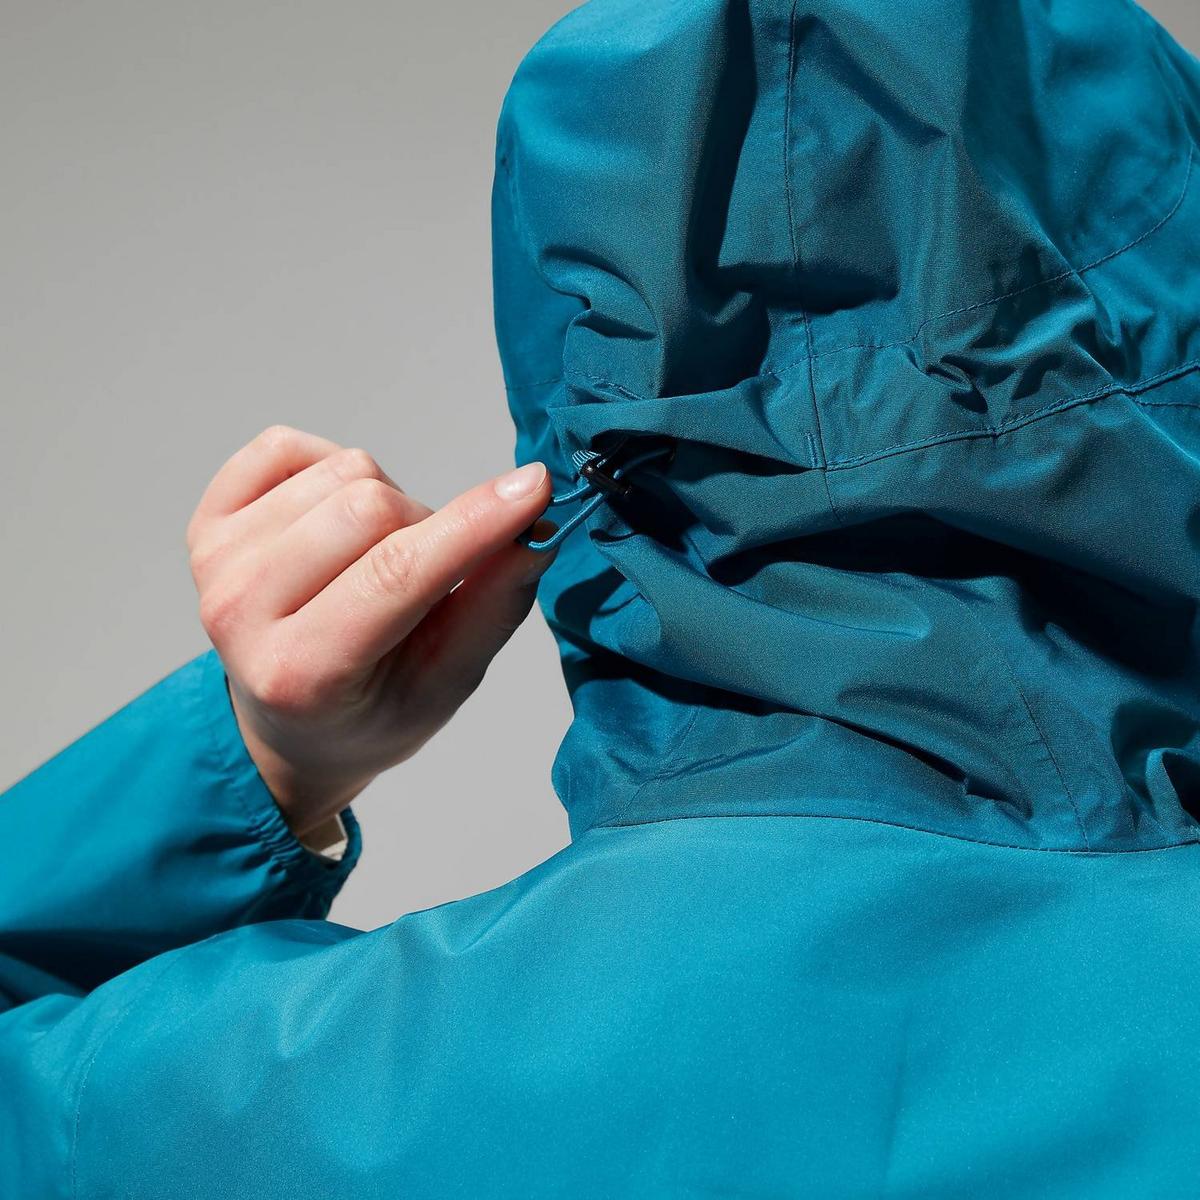 Berghaus Women's Deluge Pro 3.0 Jacket - Turquoise